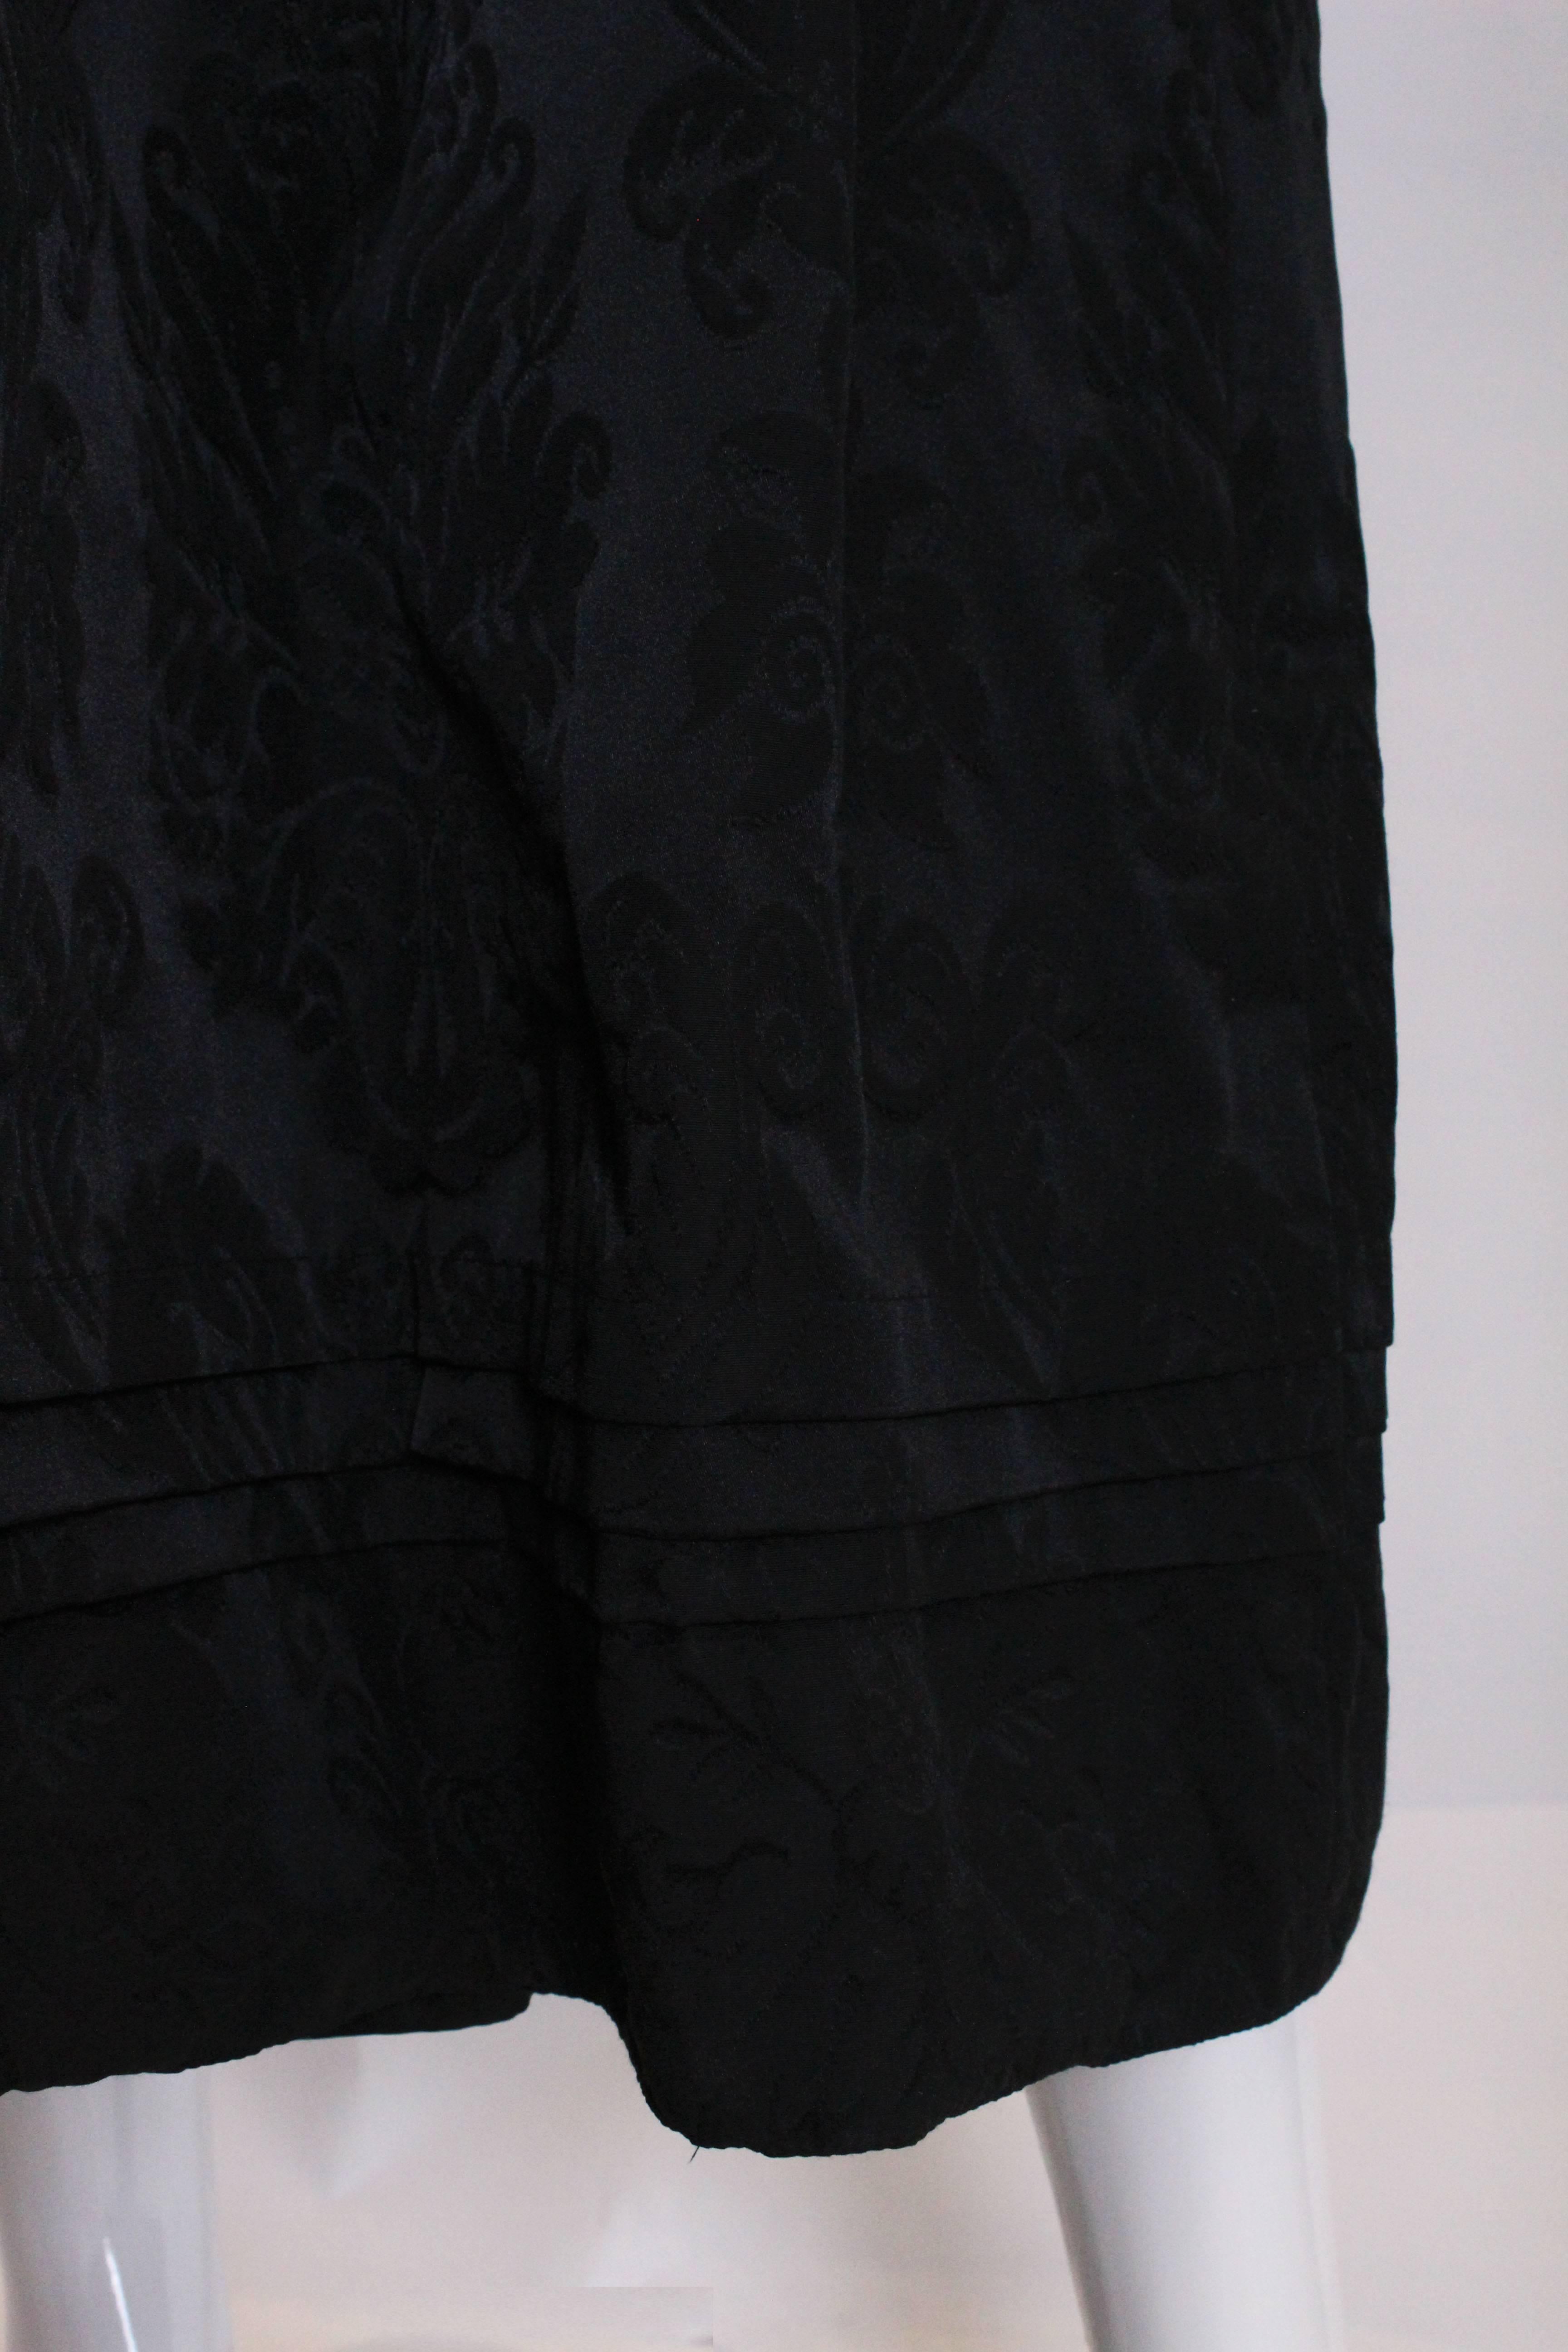 Black Evening Skirt by Louis Feraud 2